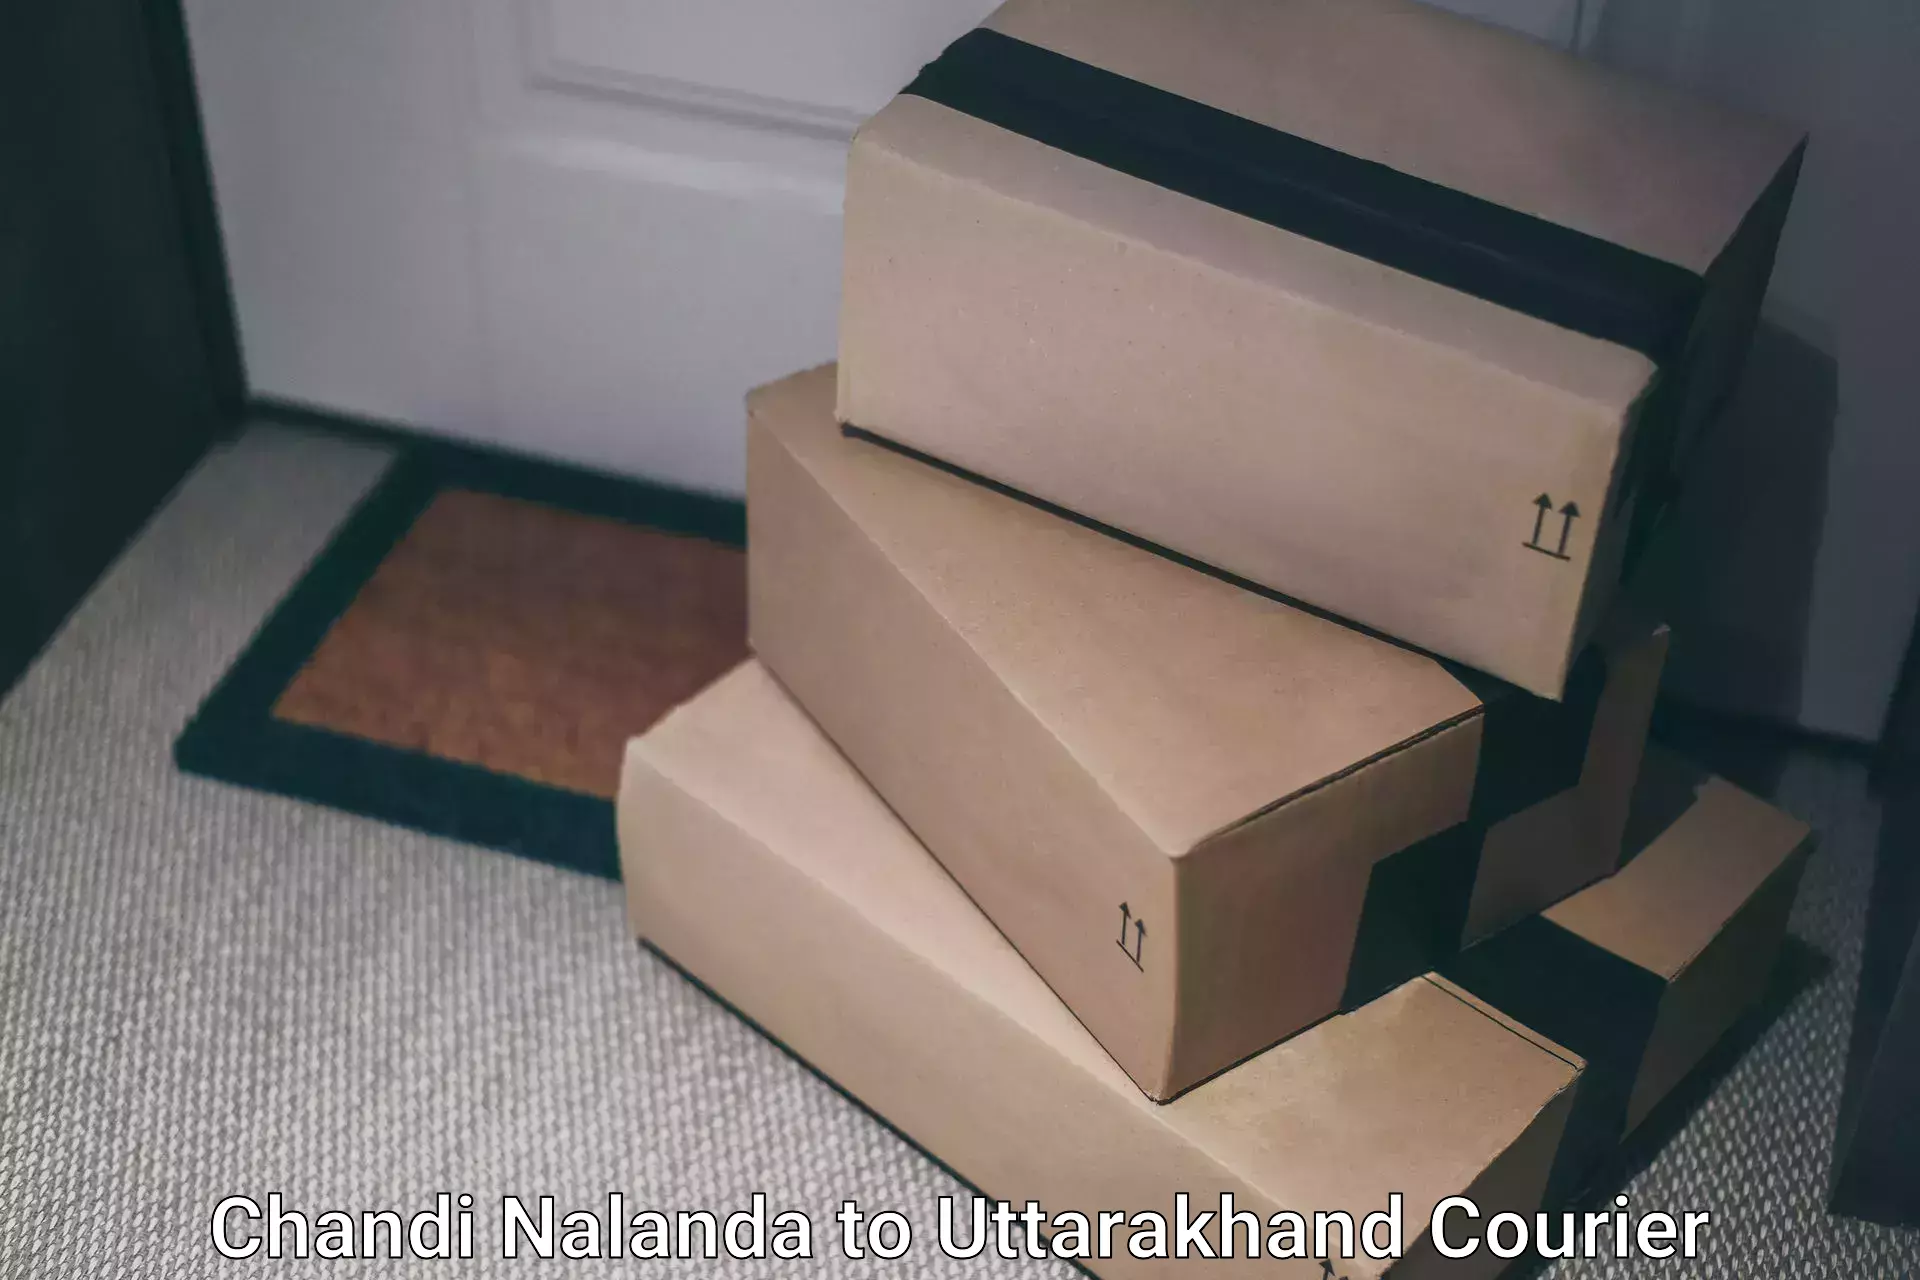 Courier service comparison Chandi Nalanda to Pauri